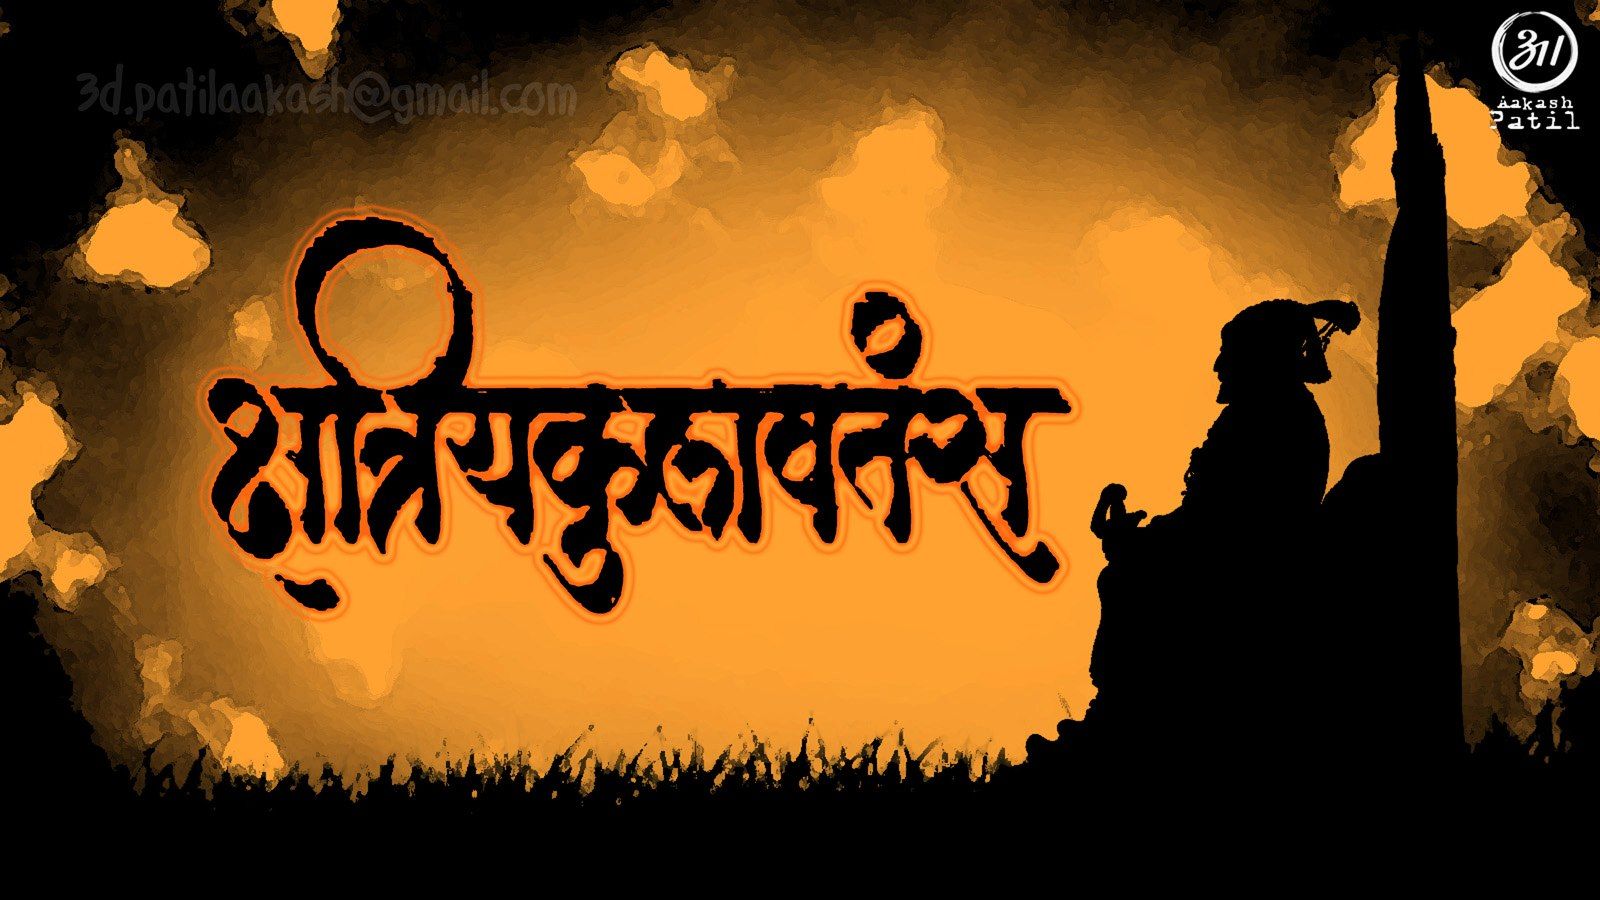 300 Chhatrapati Shivaji Maharaj Hd Images 2021 Pics Of Veer à¤¶ à¤µ à¤œ à¤®à¤¹ à¤° à¤œ à¤« à¤Ÿ à¤¡ à¤‰à¤¨à¤² à¤¡ Happy New Year 2021